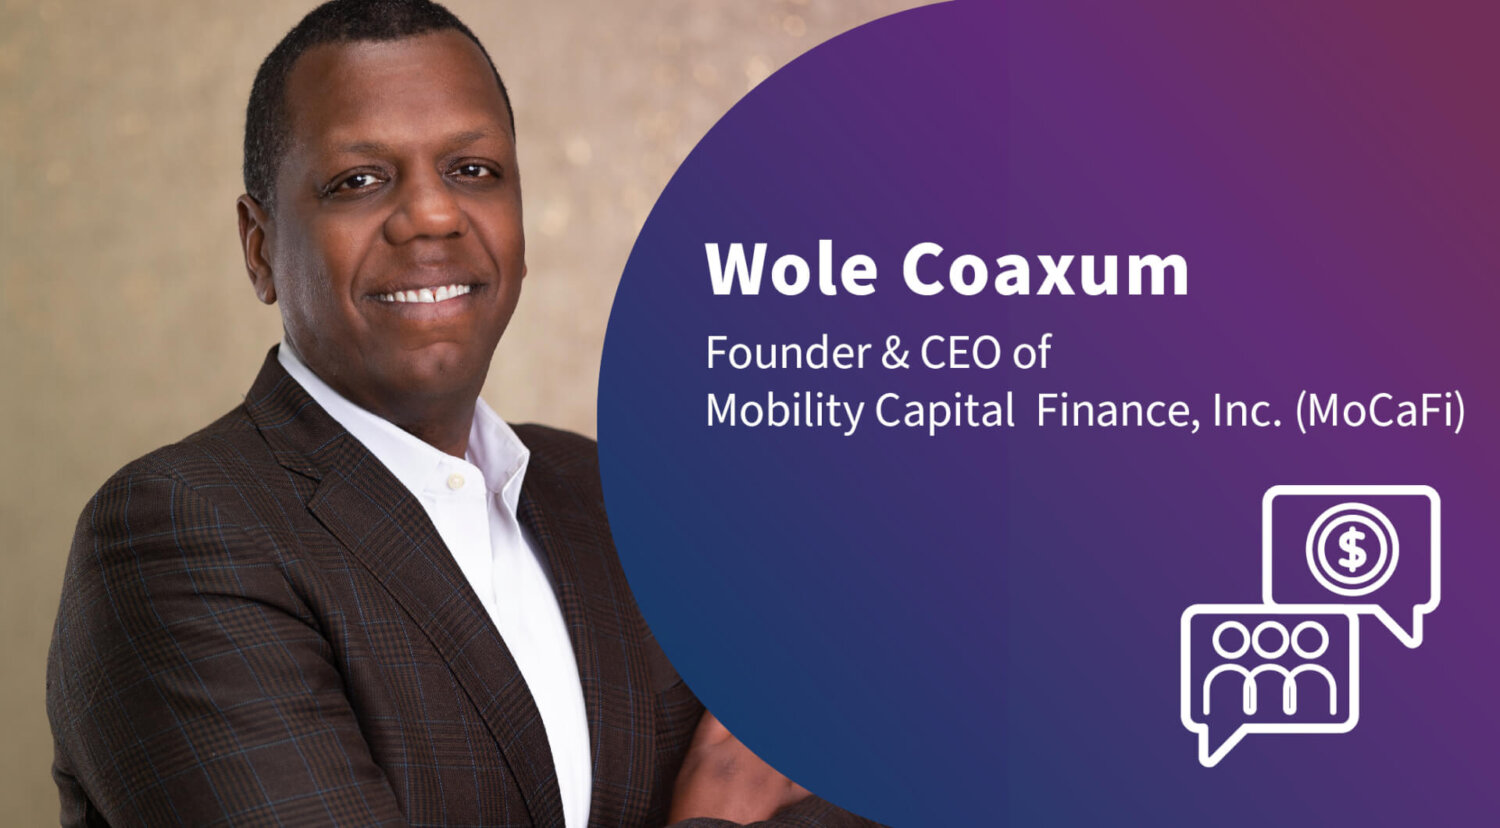 Wole Coaxum, Founder & CEO of Mobility Capital Finance, Inc. (MoCaFi)